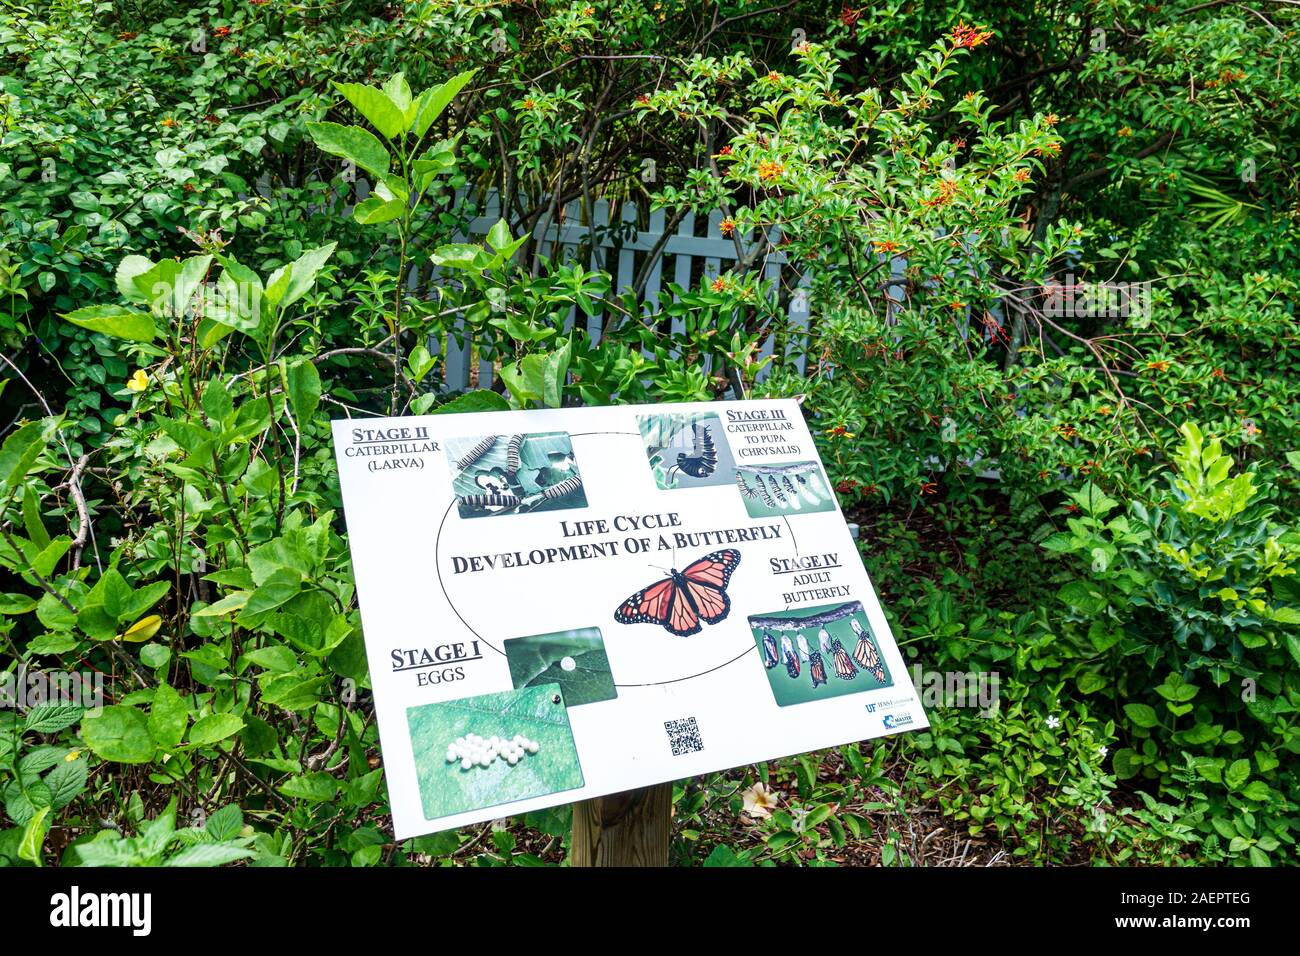 Port St. Saint Lucie Florida,Port St. Lucie Botanical Gardens,butterfly garden,interpretive exhibit,life cycle diagram,vegetation,sign information,FL1 Stock Photo